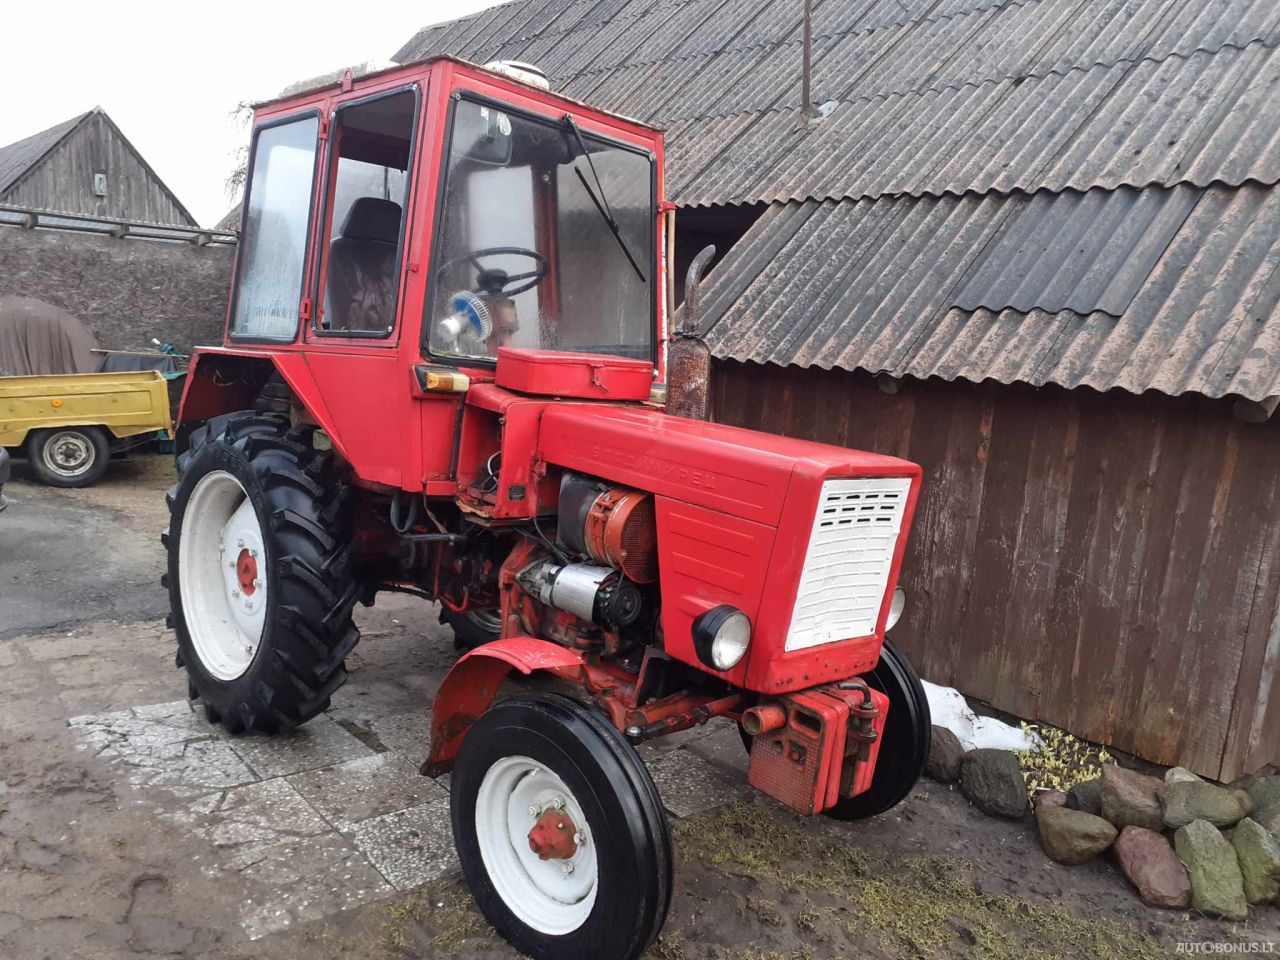 T Traktorių t25, Tractor